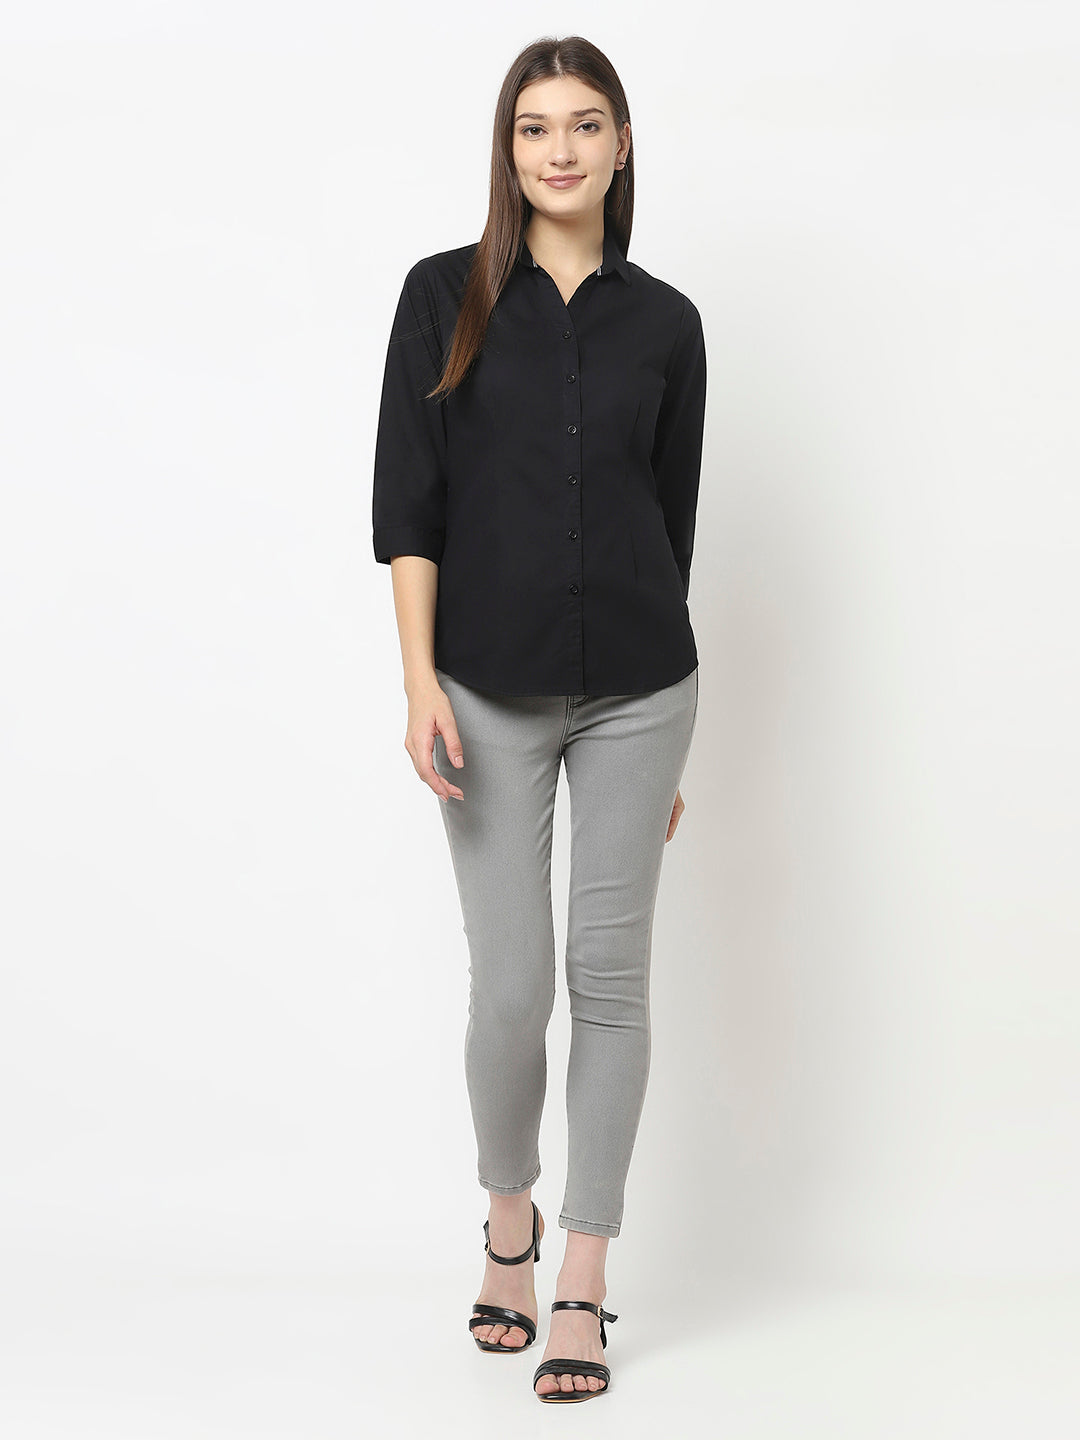 Black Button-Down Shirt in Cotton Blend 